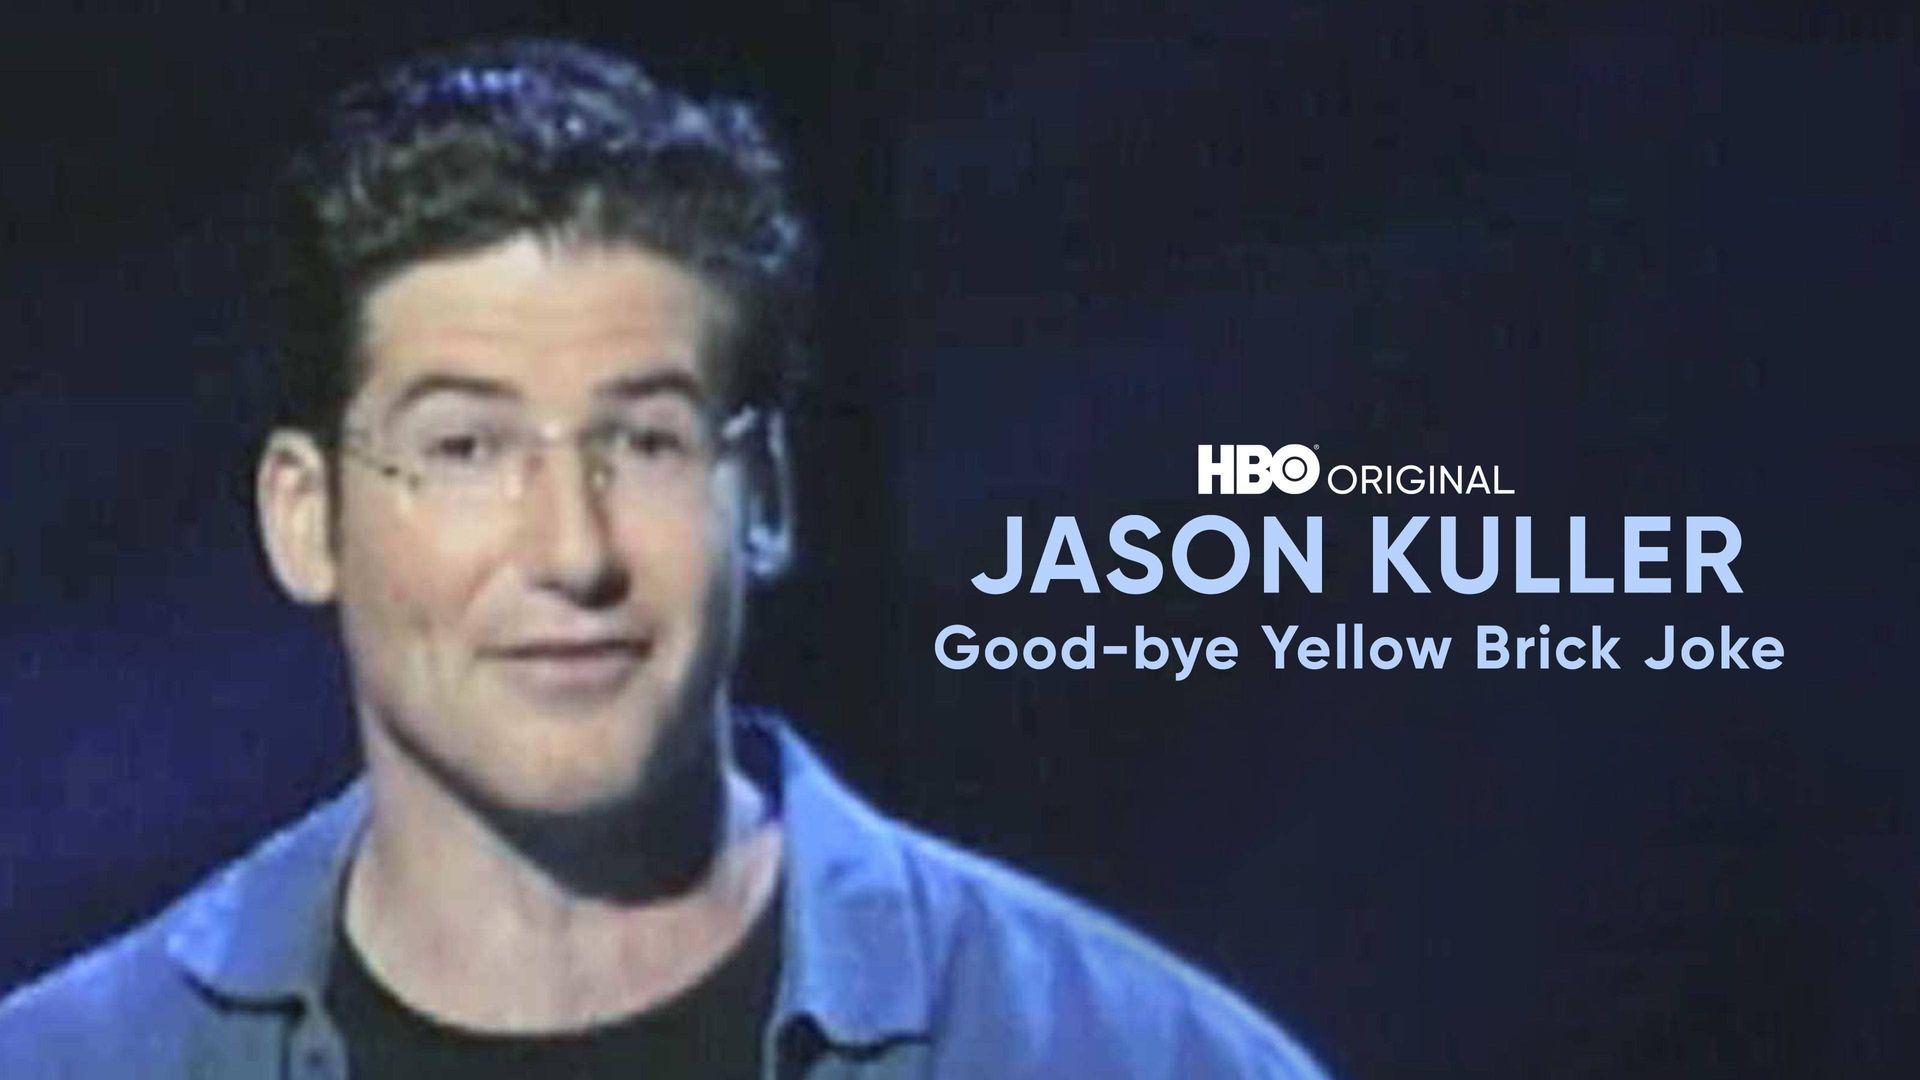 Jason Kuller: Good-bye Yellow Brick Joke background